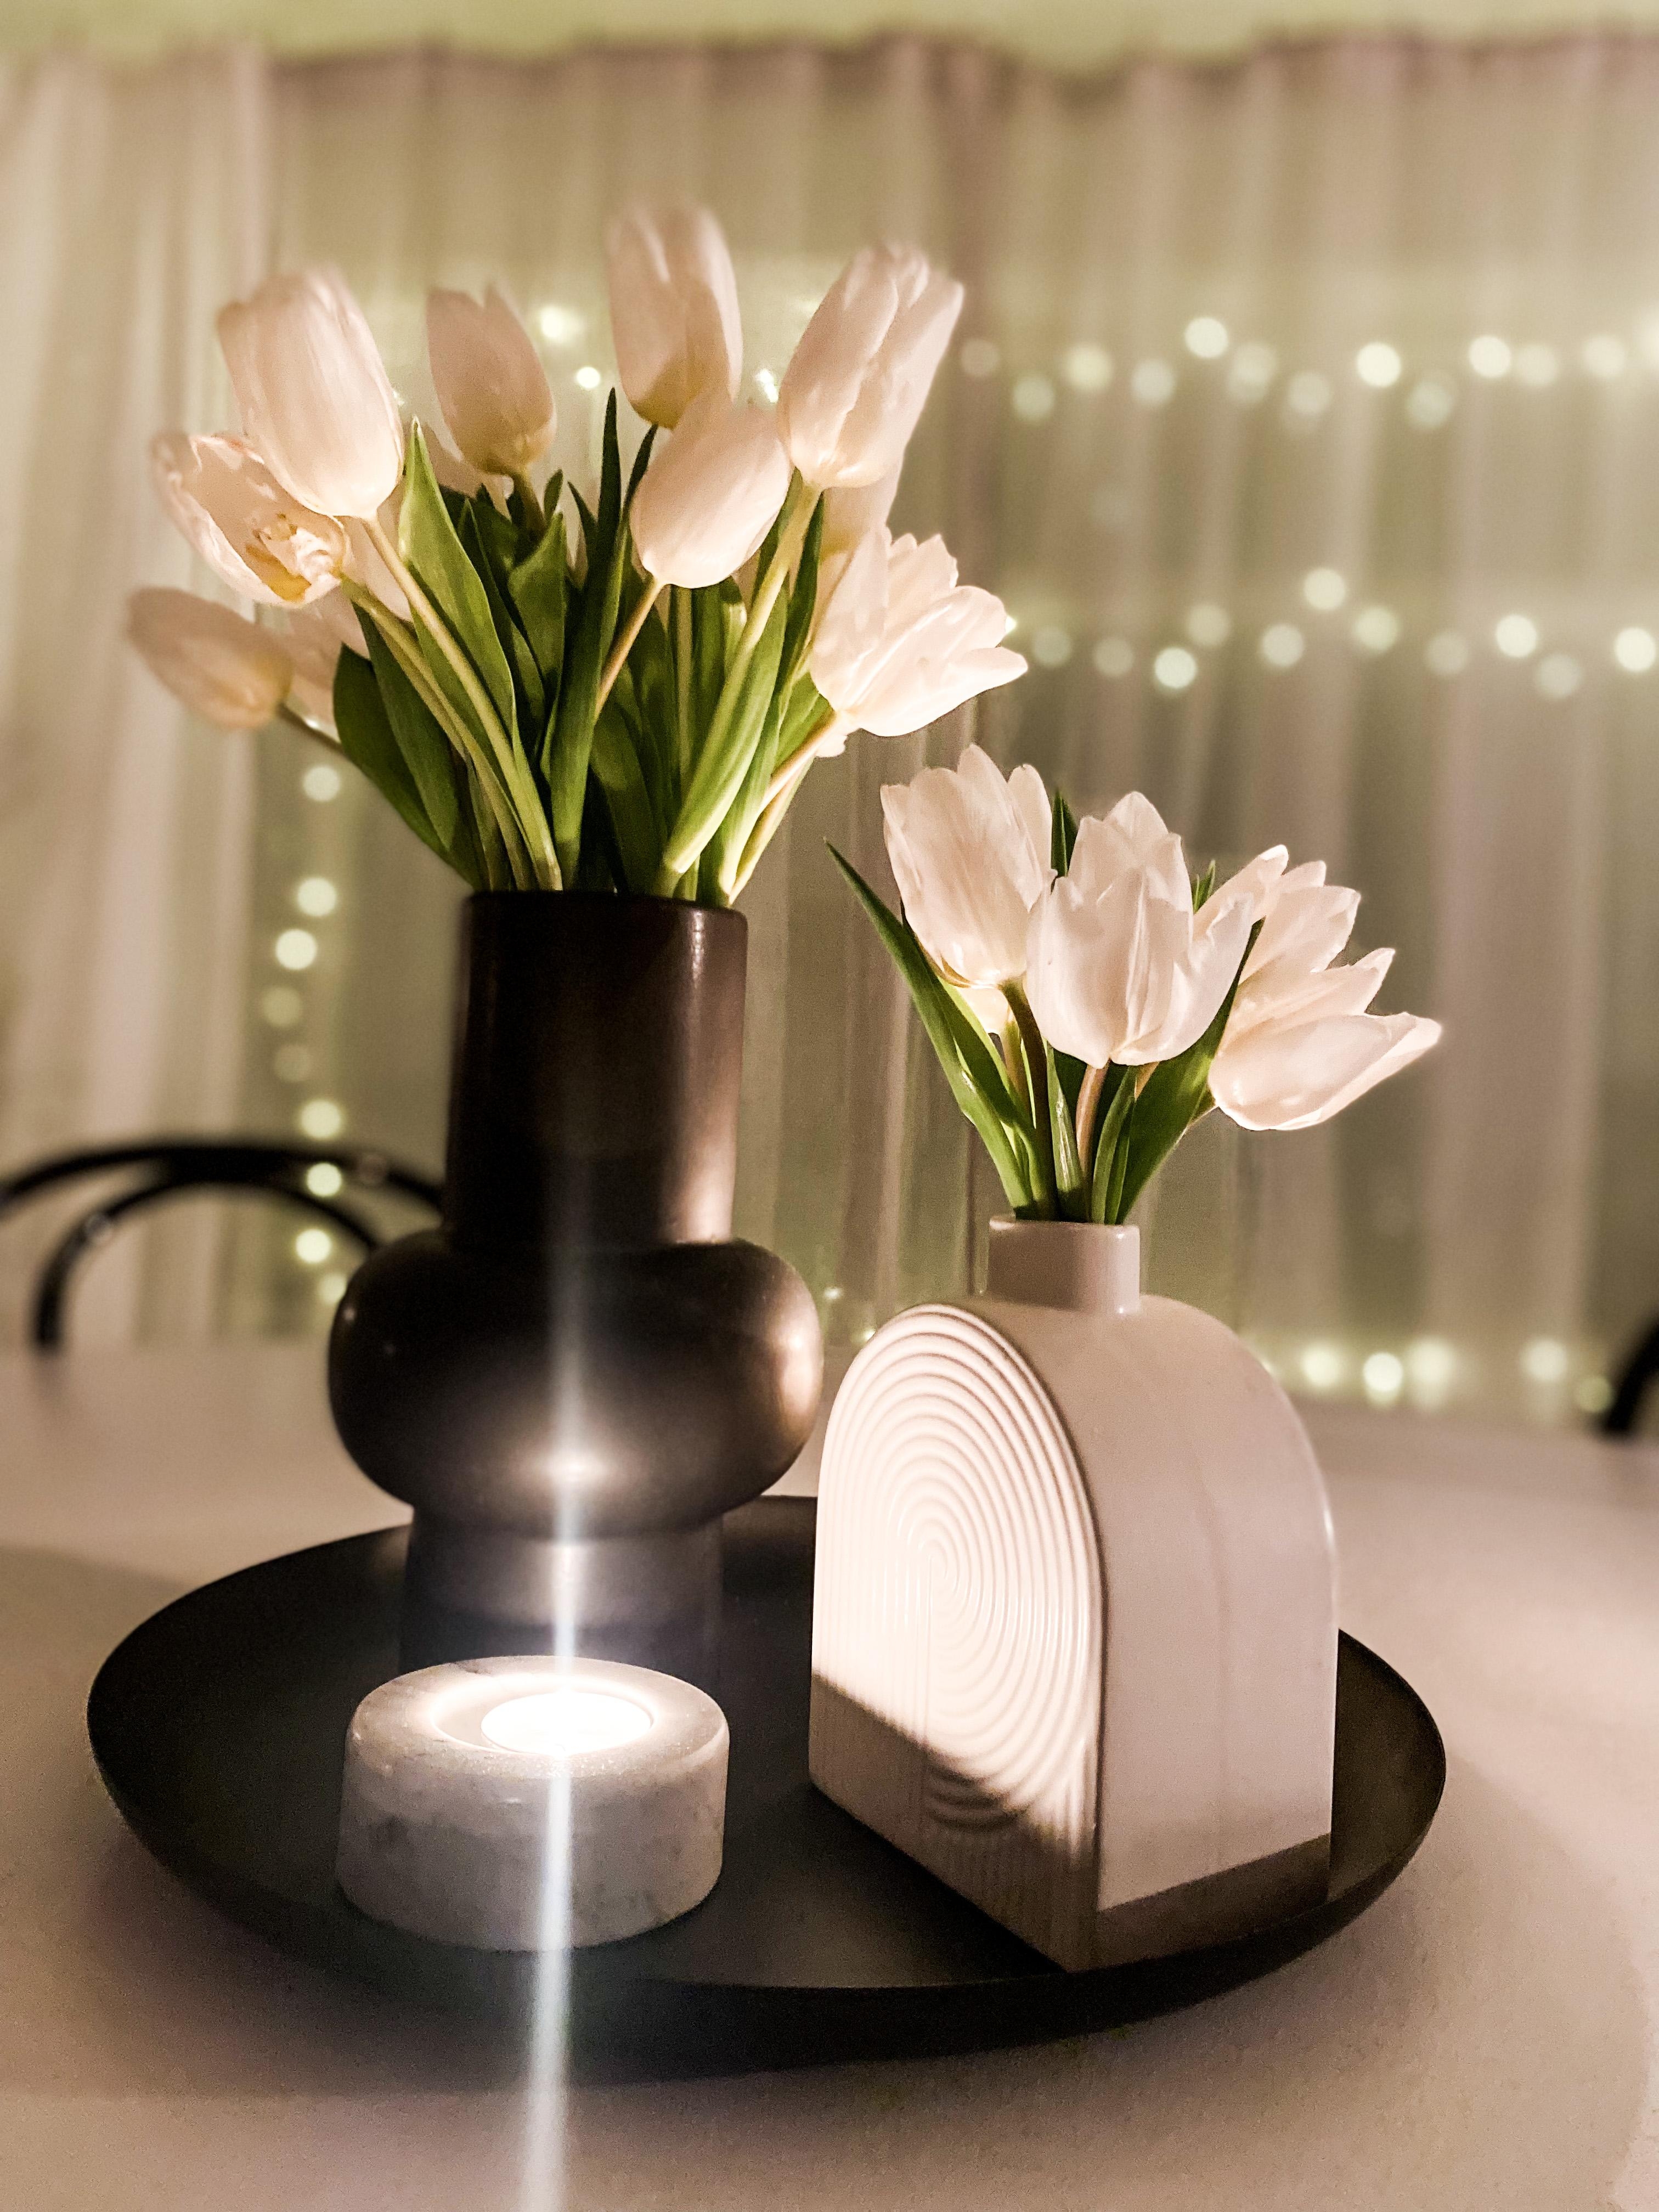 Tulpenliebe 

#tulips #homedecor #dekoideen #vasenliebe #vasenverrückt #cozyhome #interiorinspo